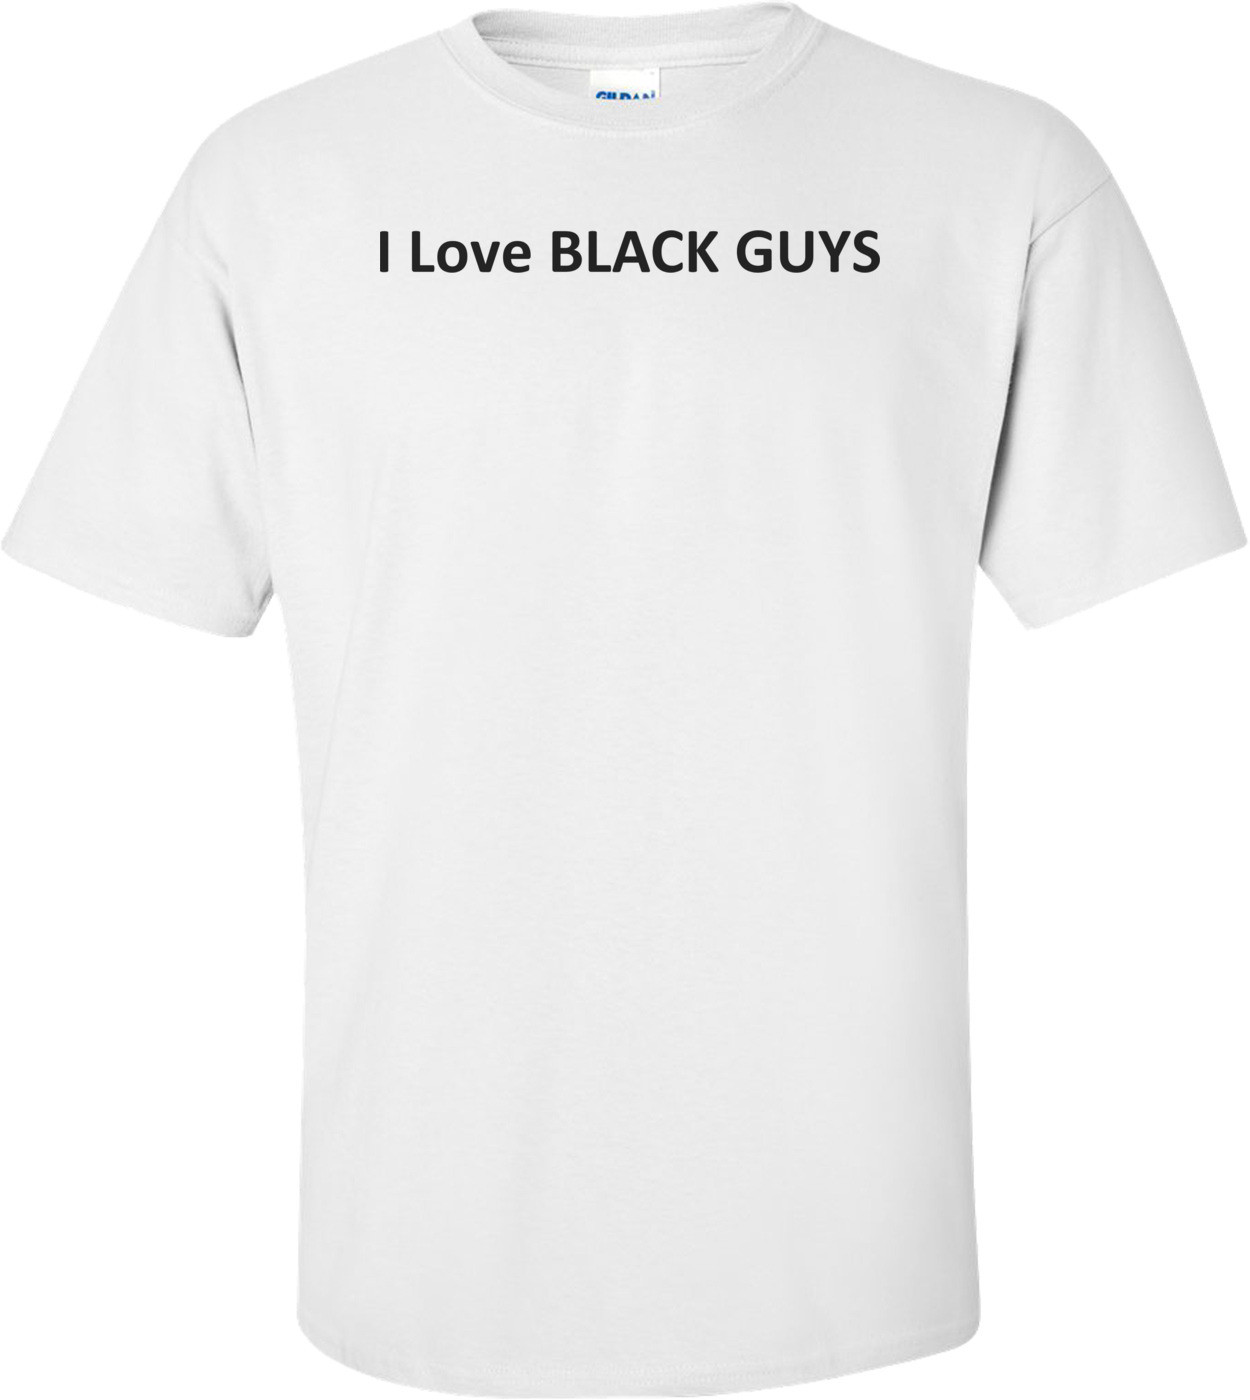 I Love BLACK GUYS T-Shirt